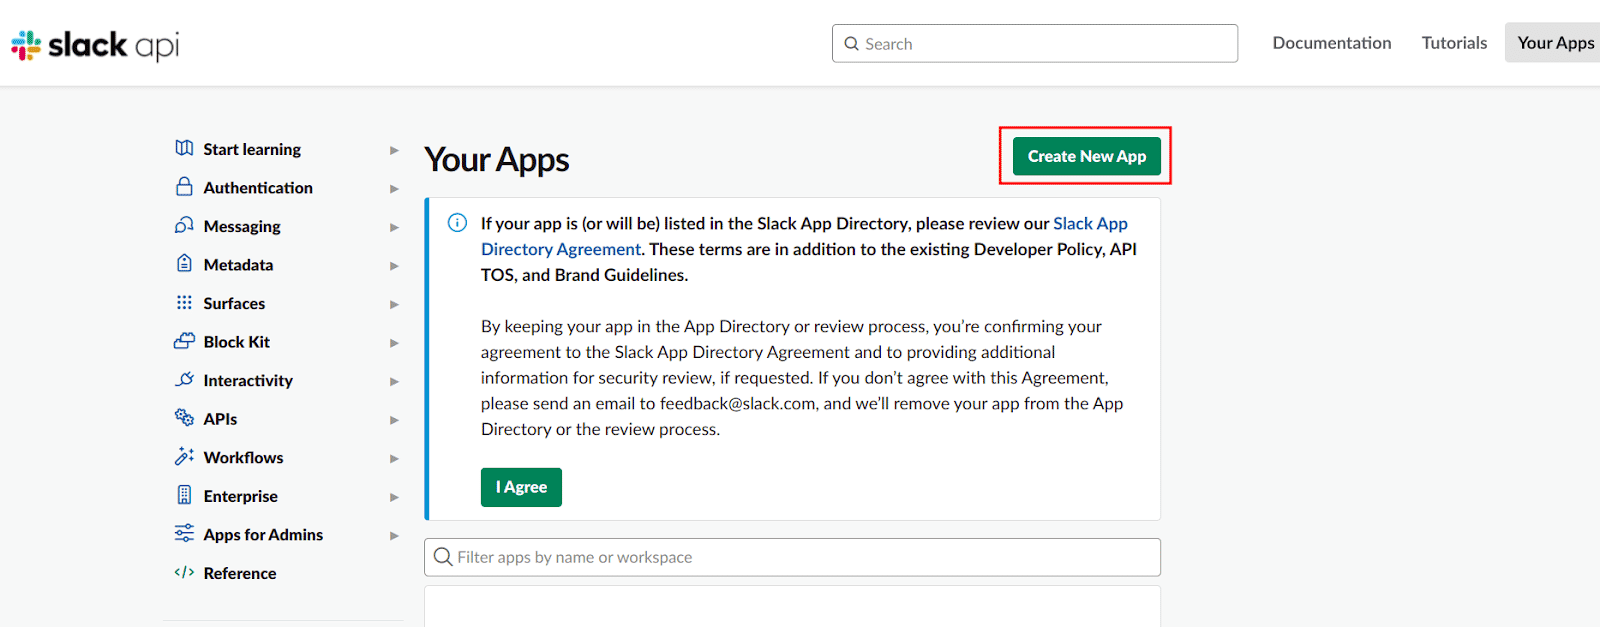 slack api Create New App